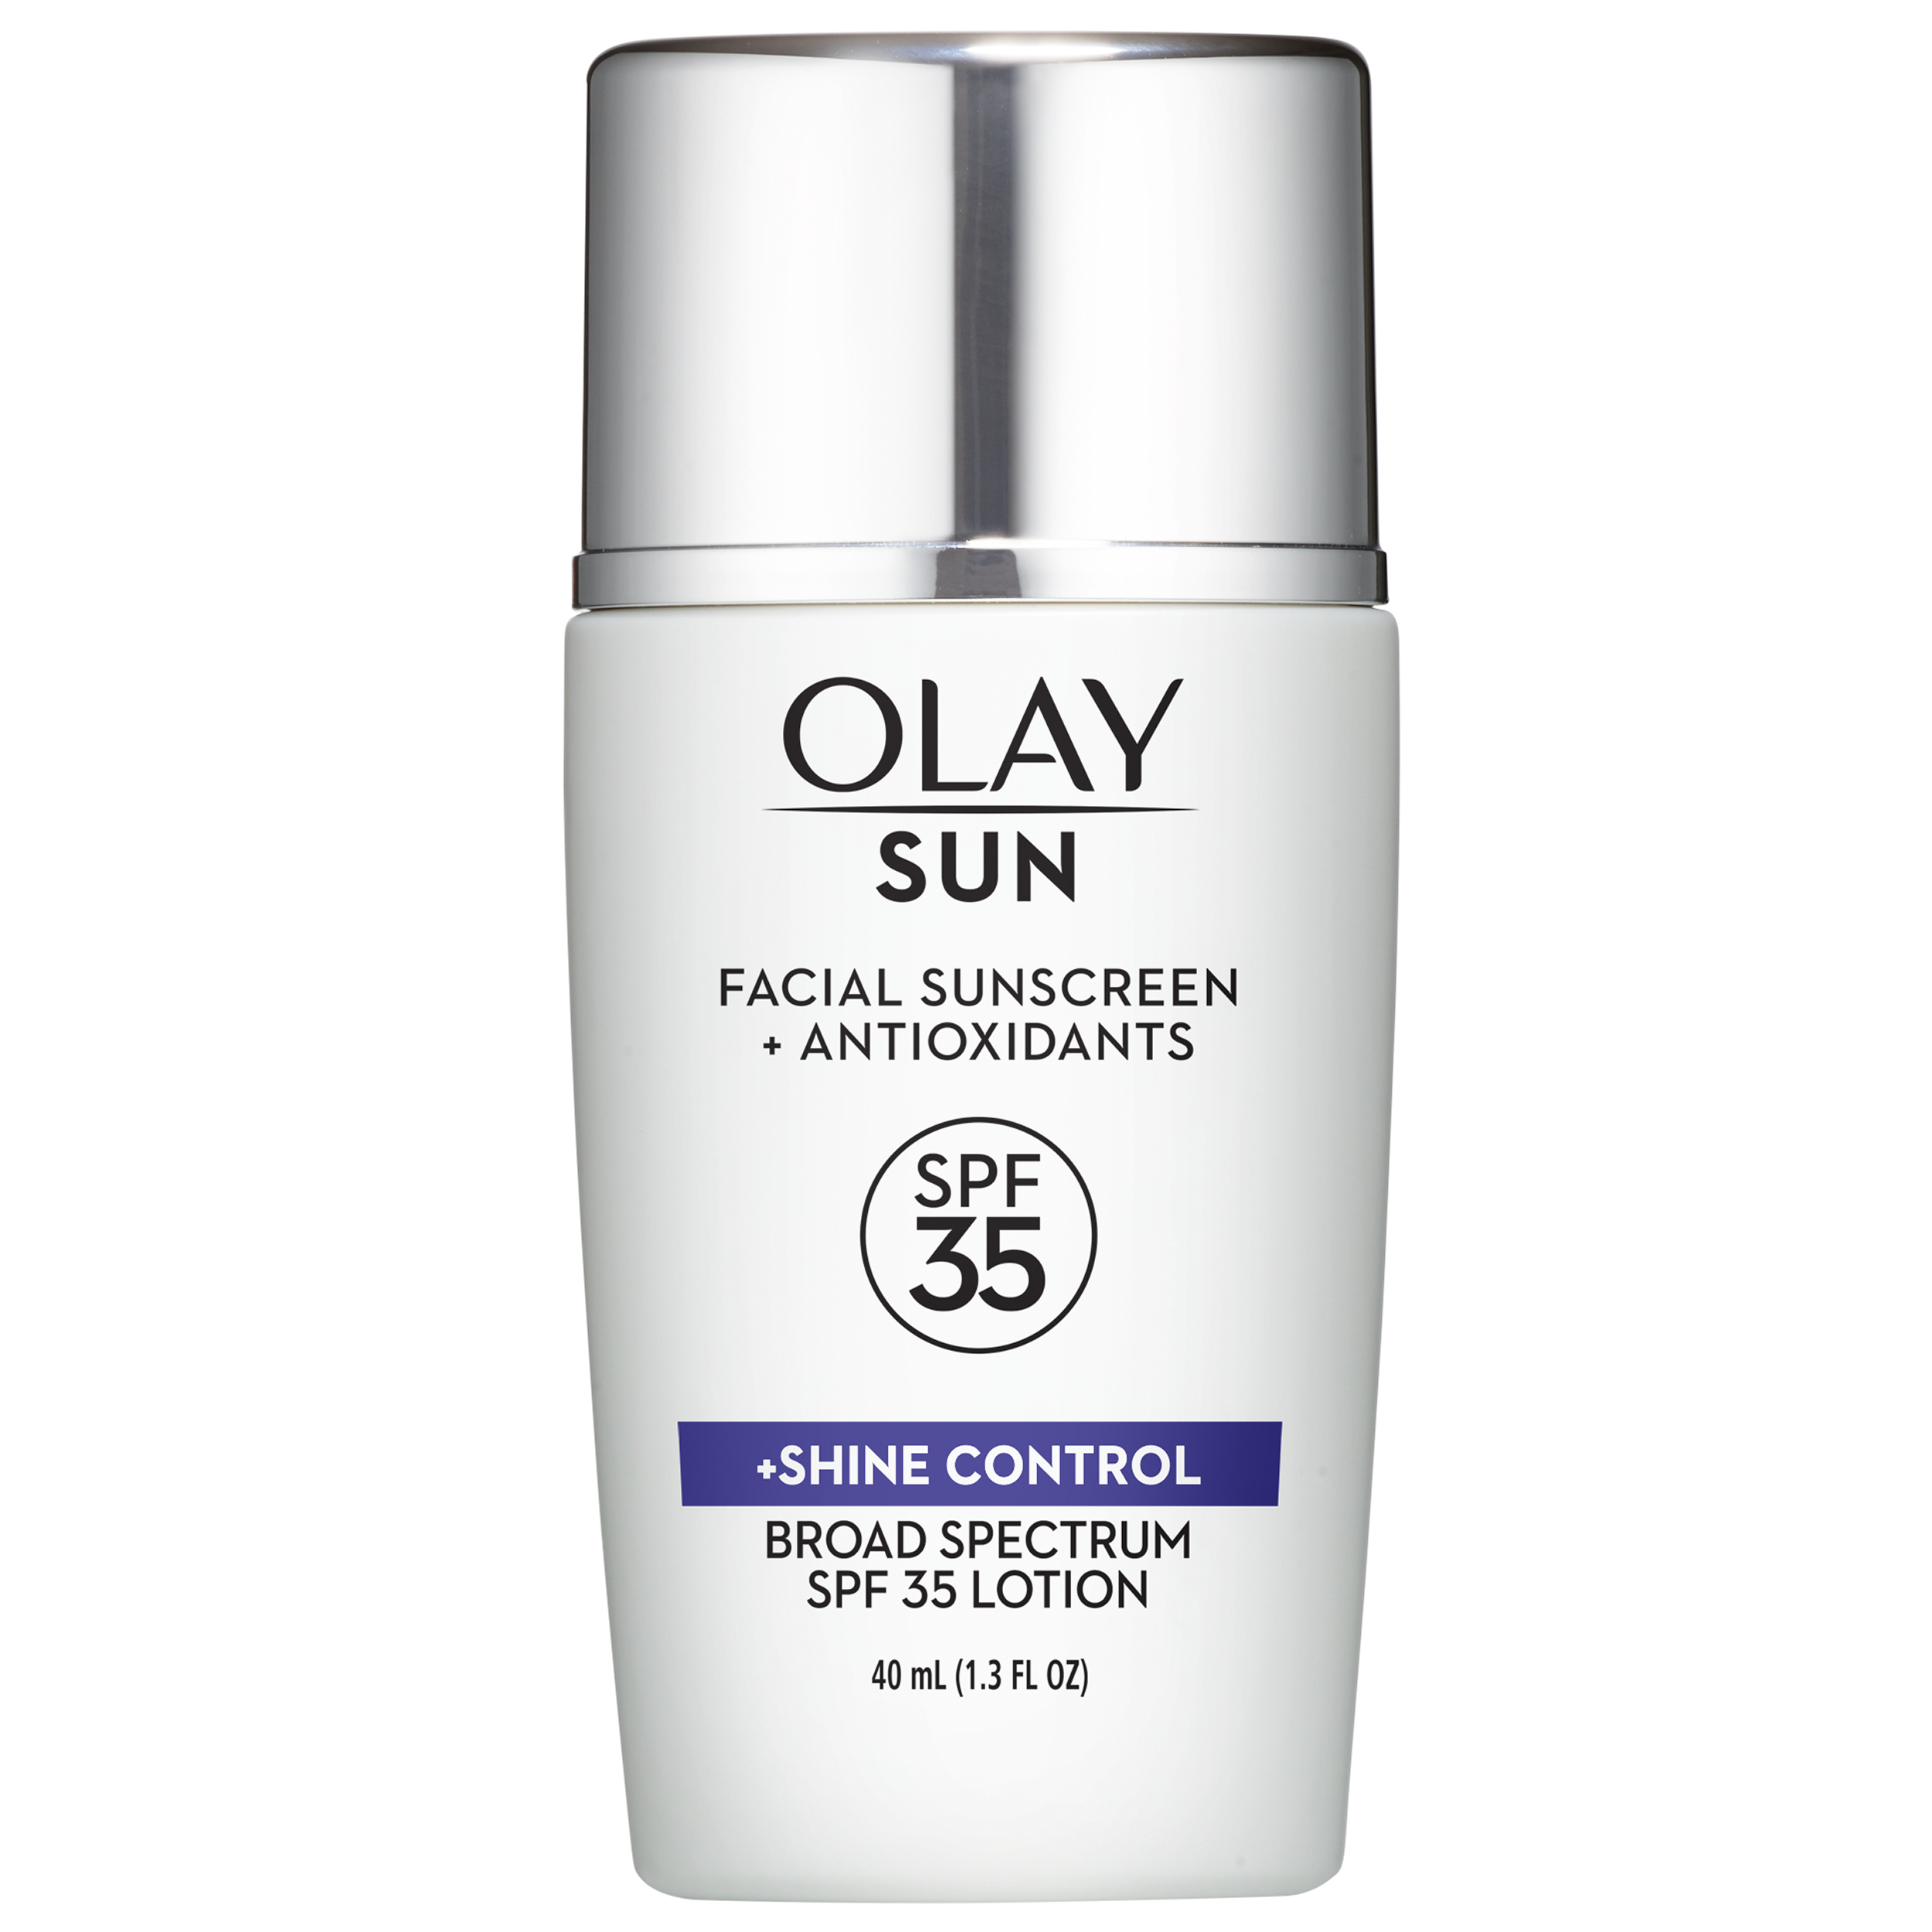 Olay Sun Face Sunscreen and Shine Control, SPF 35, 1.3 fl oz - image 1 of 11